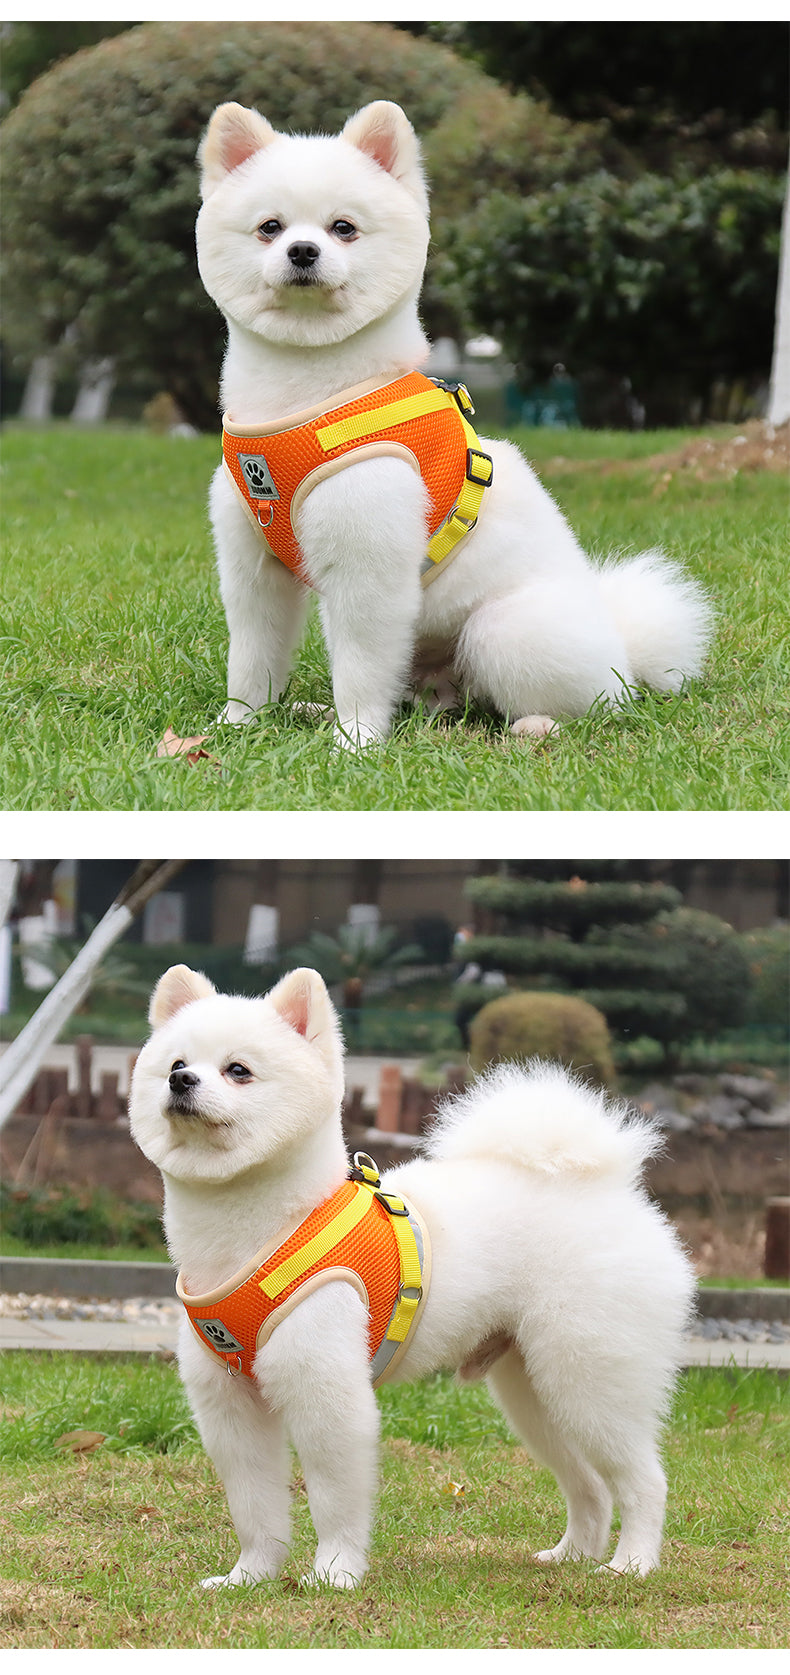 Reflective Safety Dog Harness and Leash Set Vest for pet